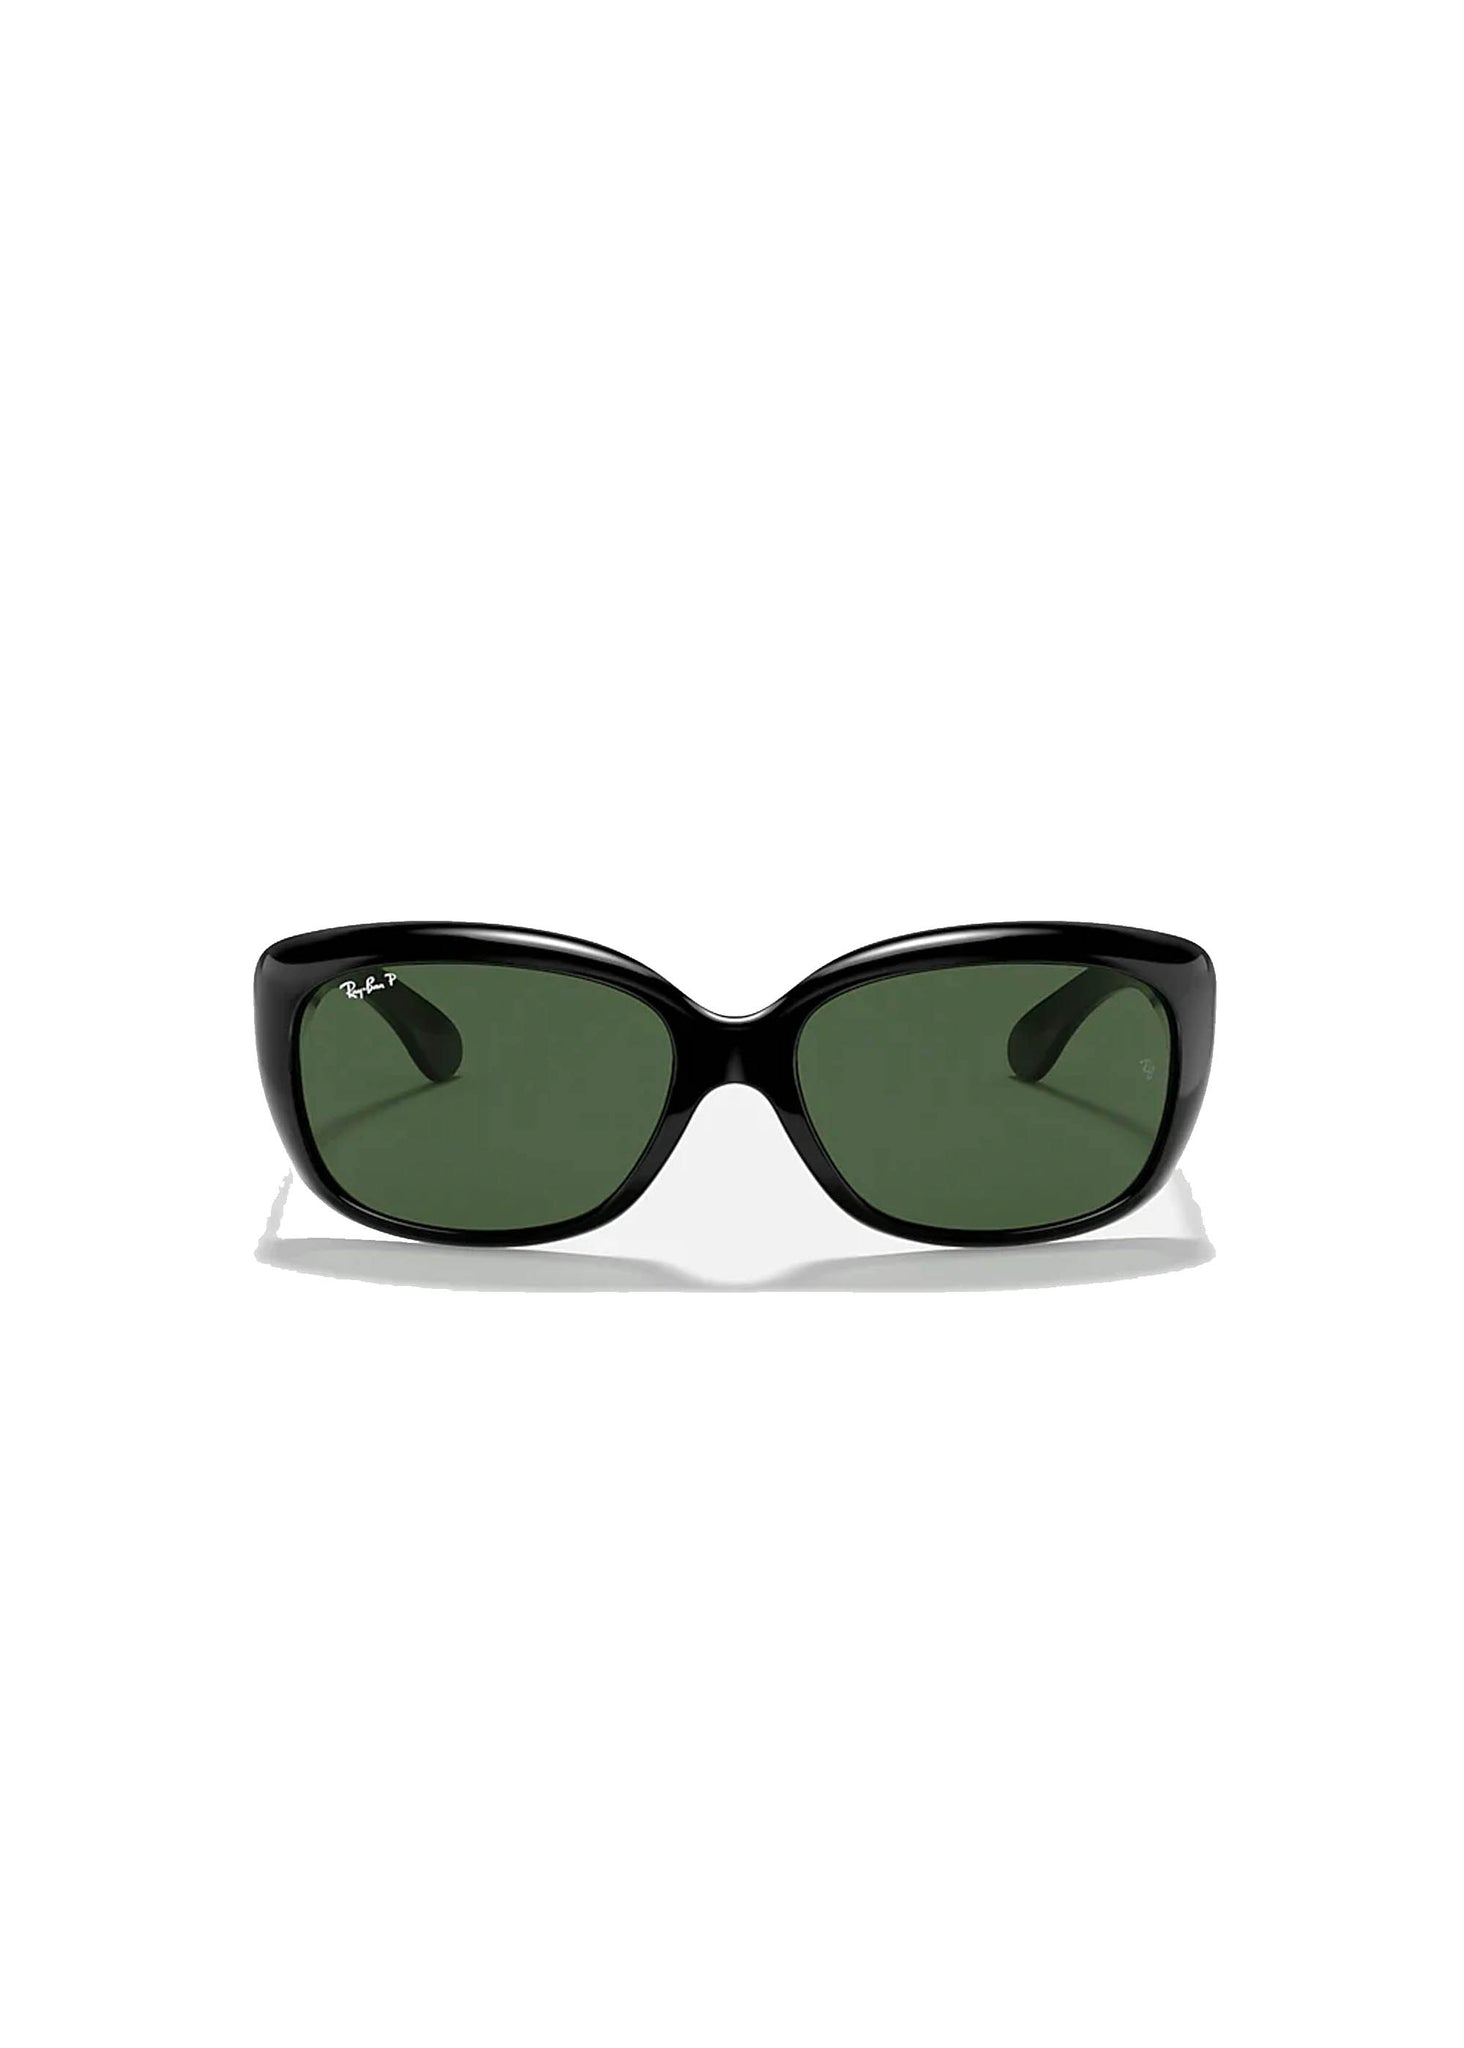 Raybans Bylon Woman Sunglasses - Dark Green